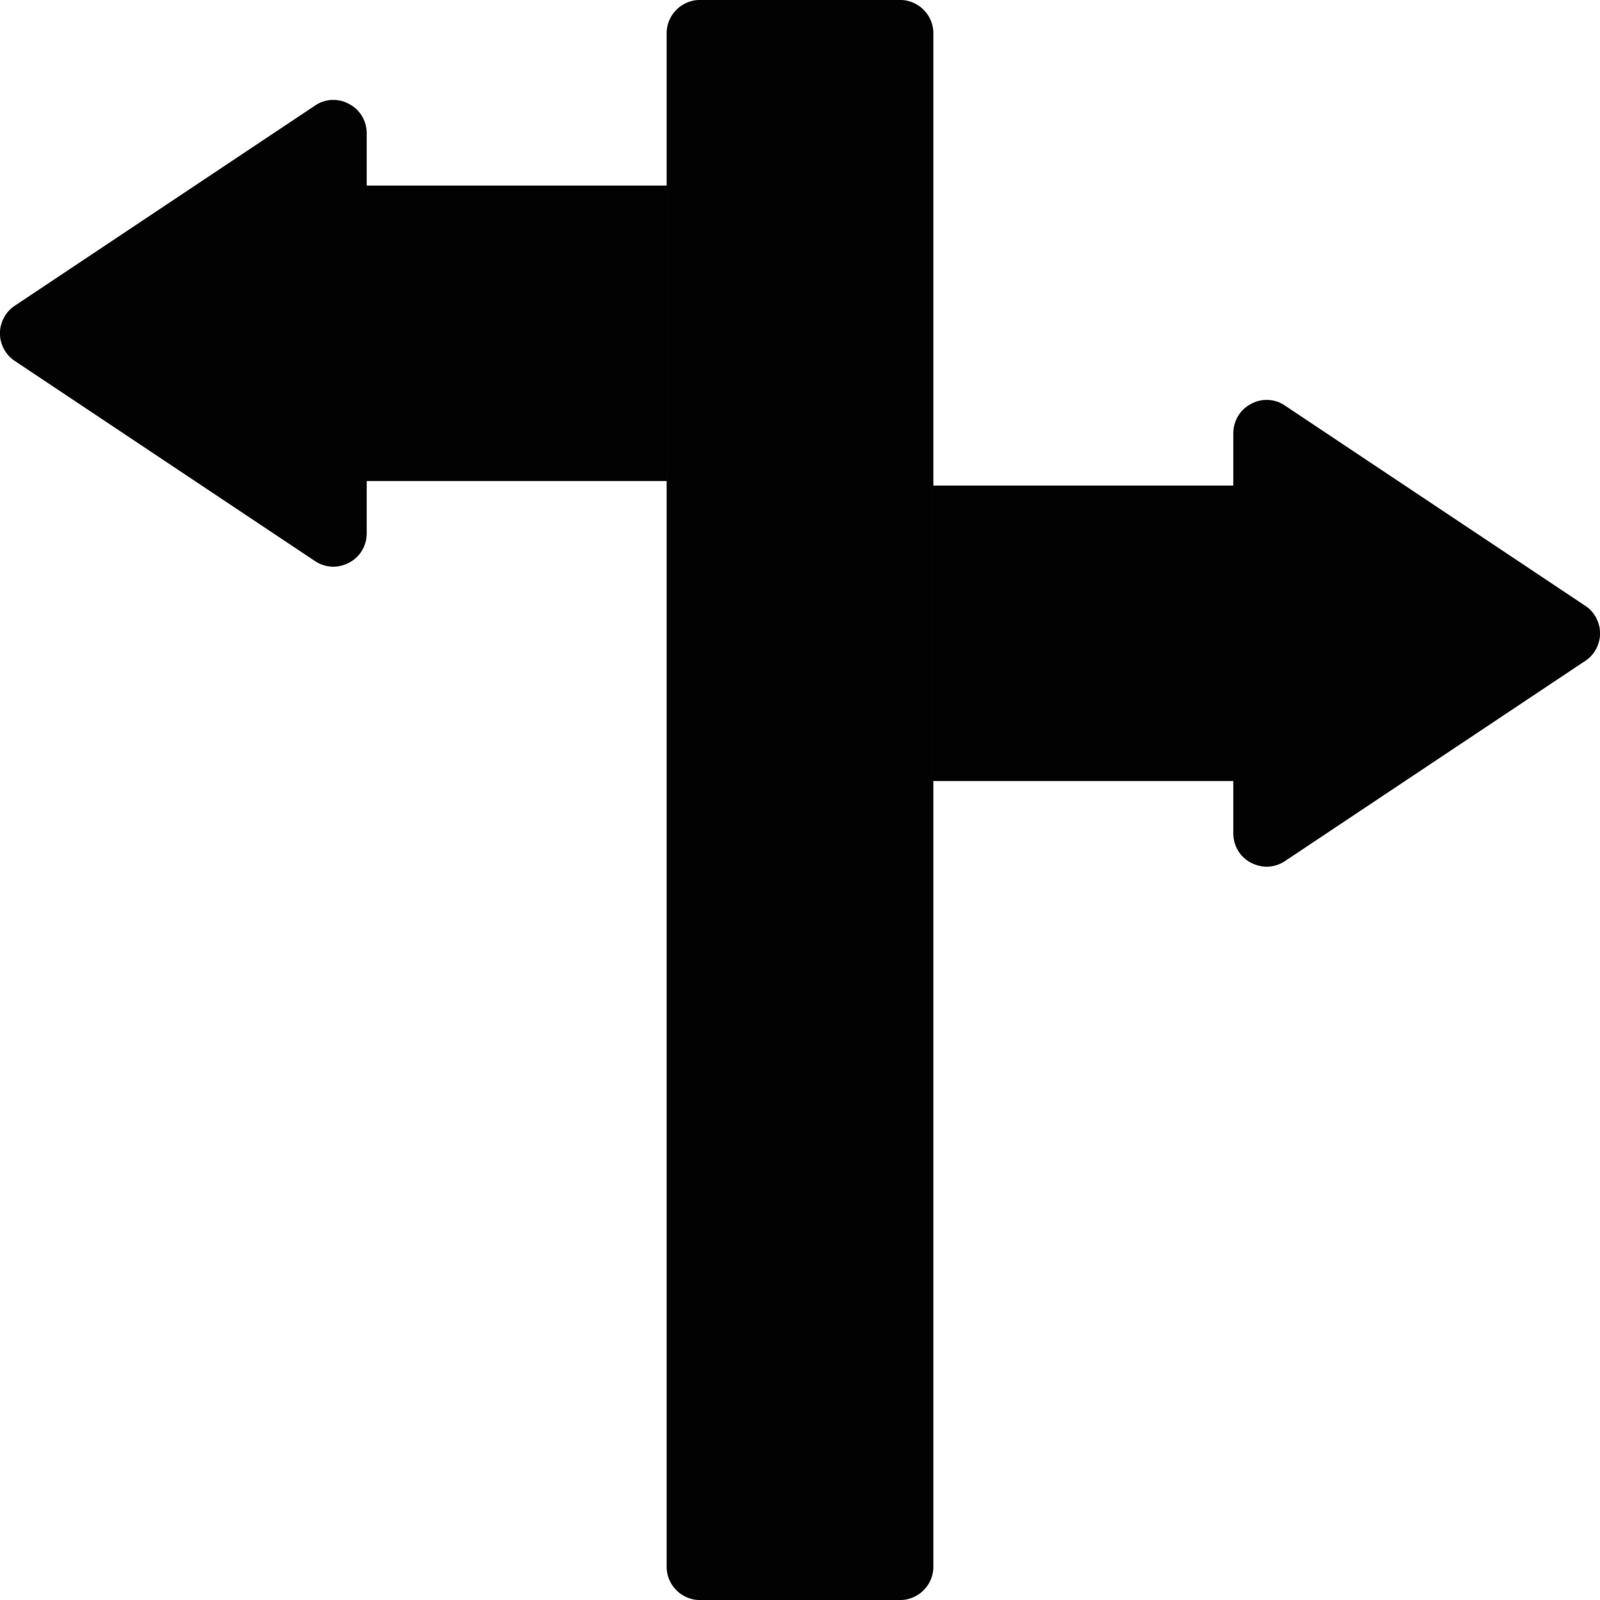 direction arrow by vectorstall